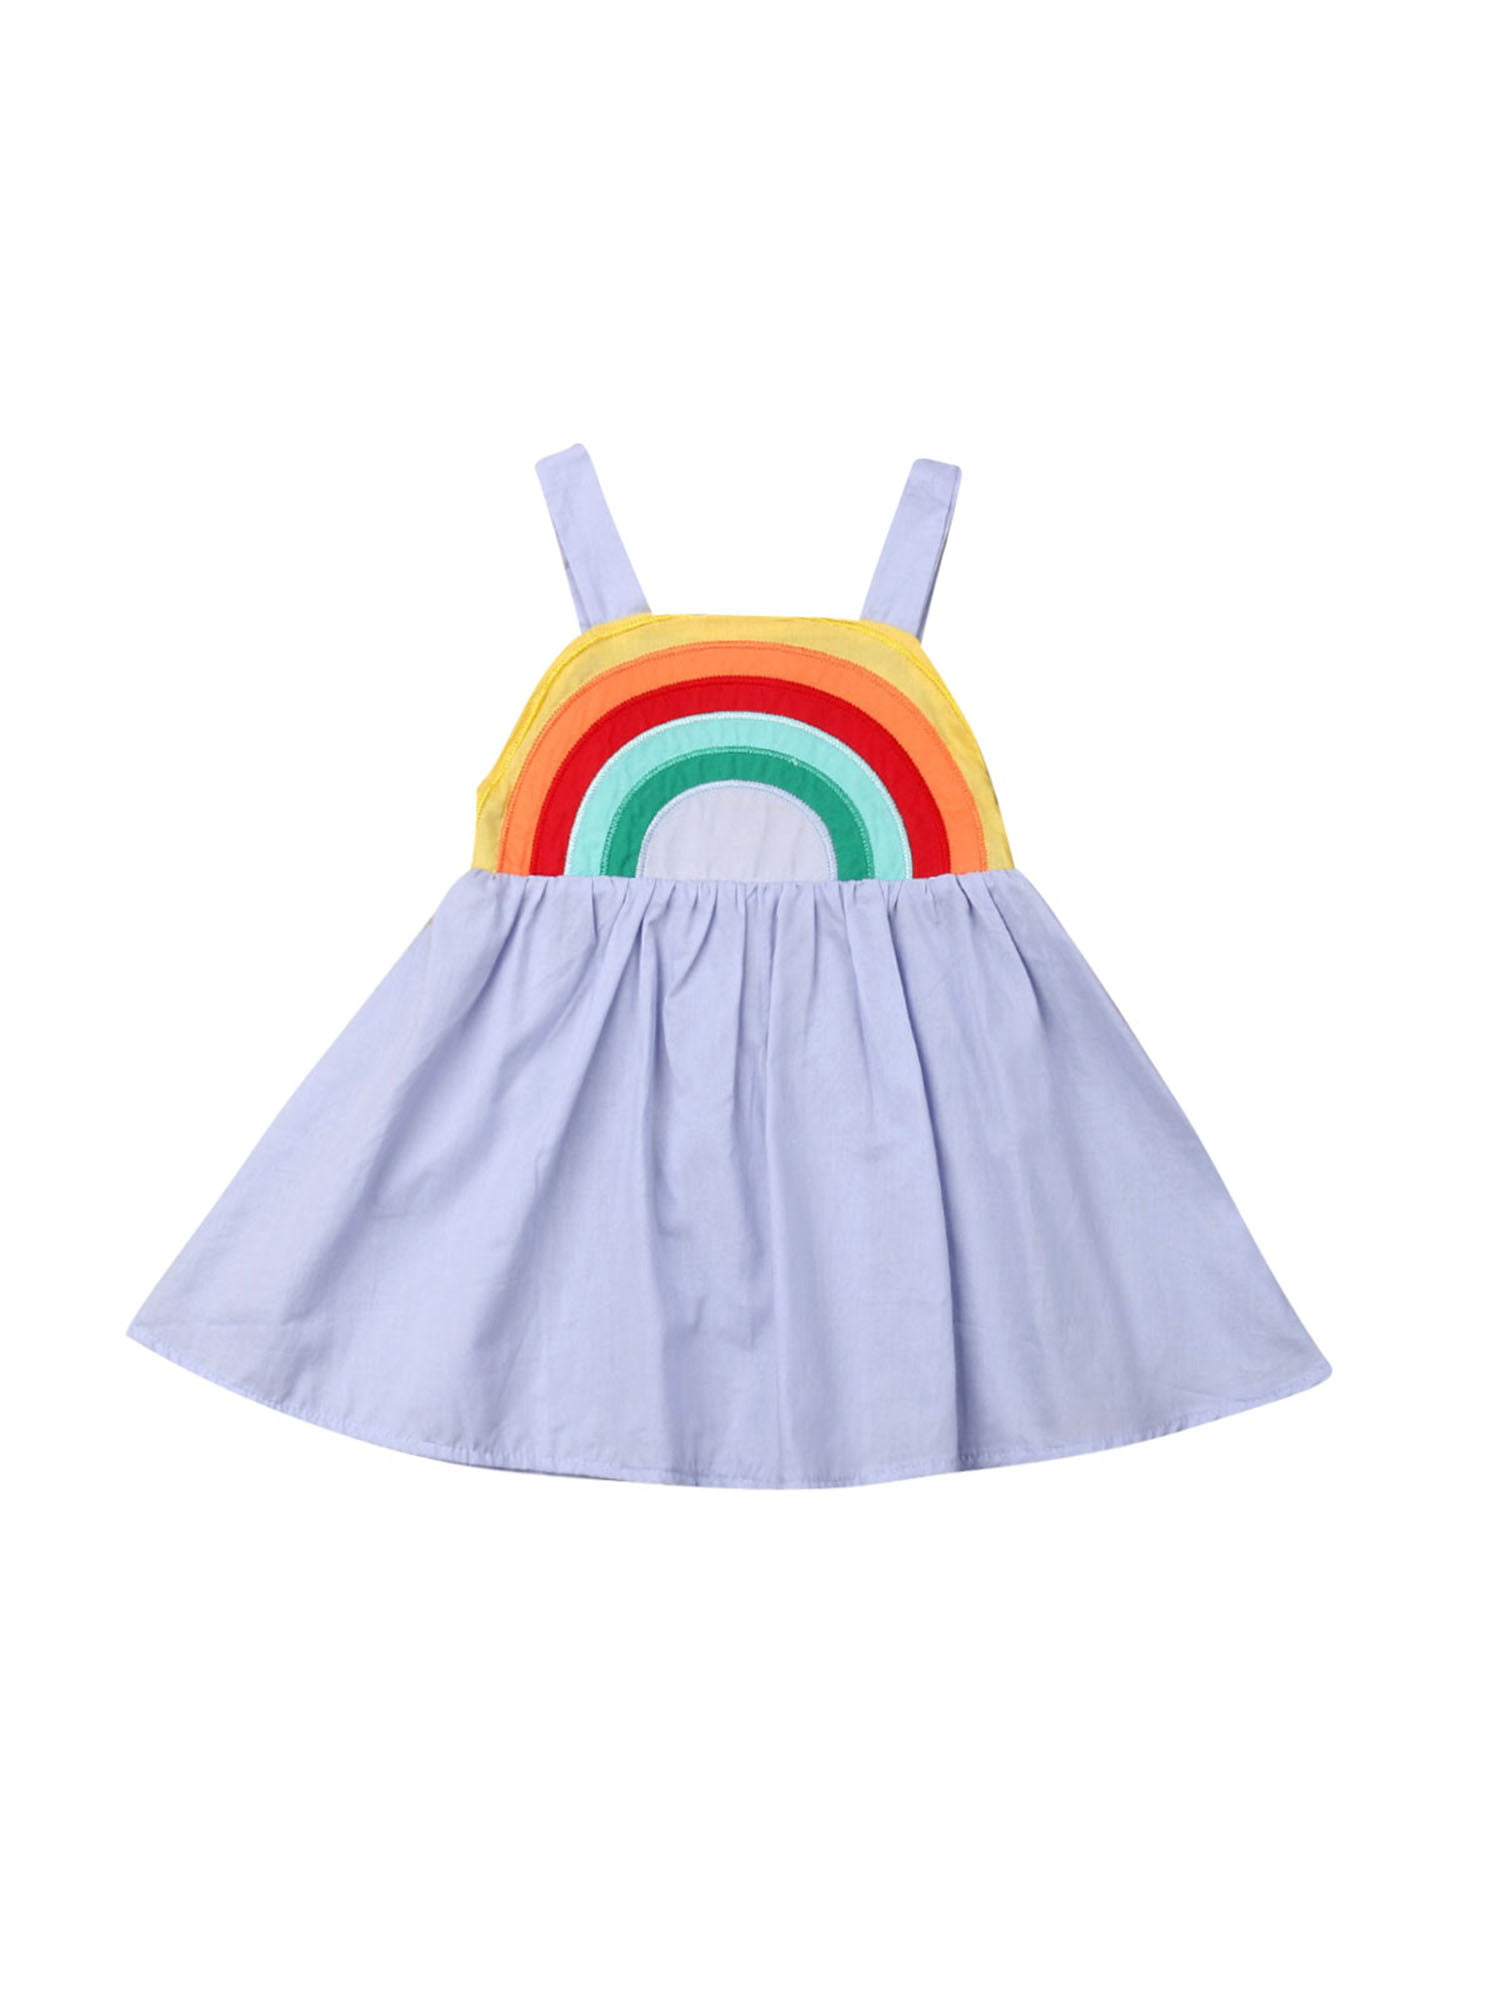 Toddler Baby Girl Dress Summer Cotton Linen Ruffle Halter Sleeveless Kids Casual Beach Party Dresses 1-6 Years